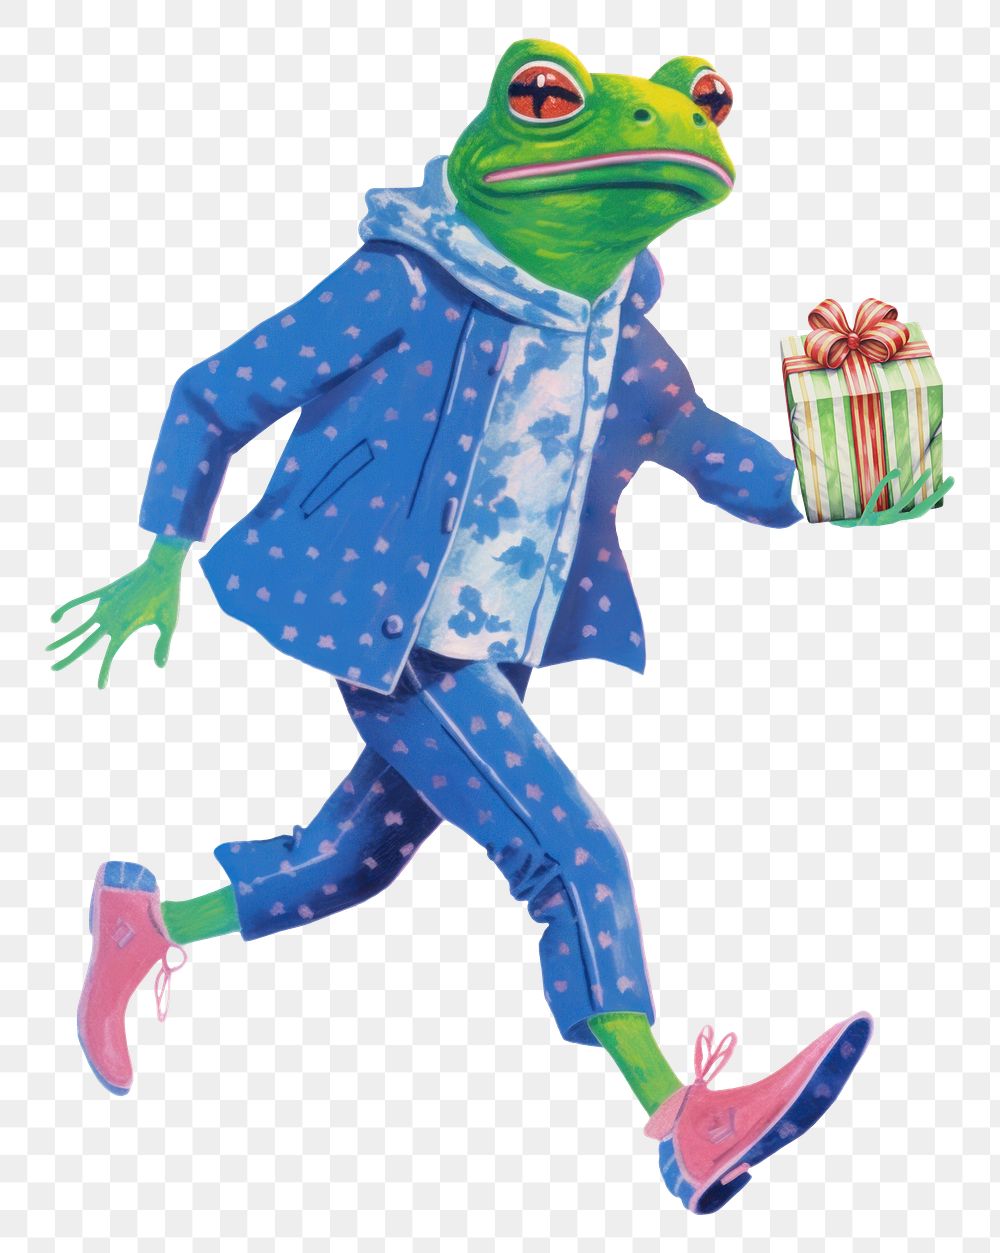 Frog character png holding gift box digital art illustration, transparent background